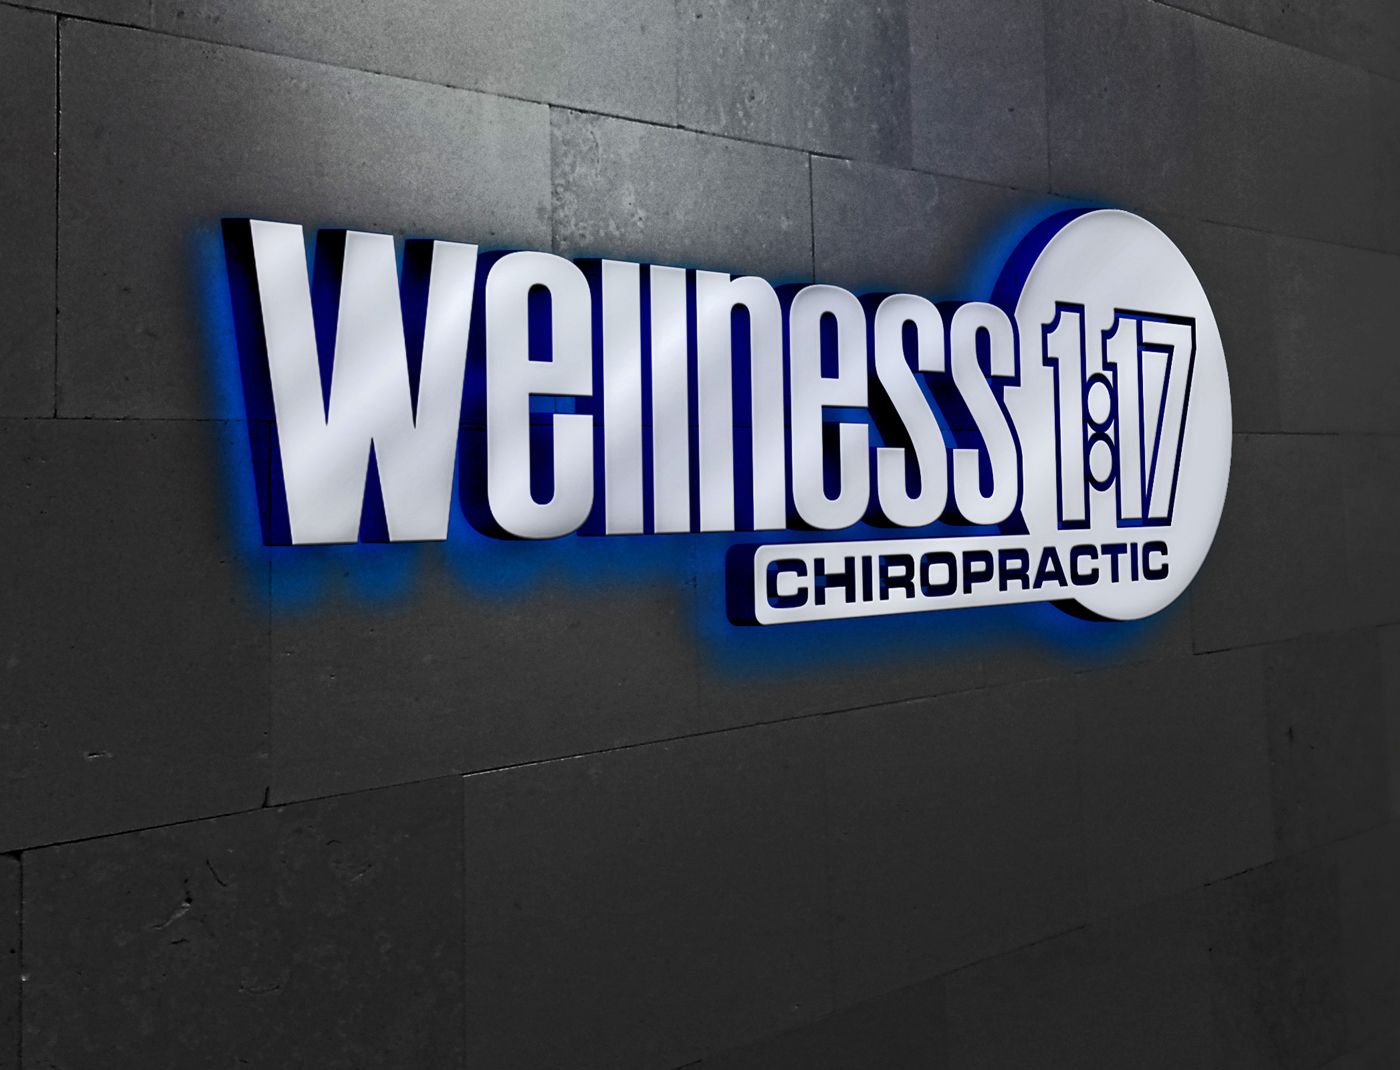 Wellness 1:17 Signage